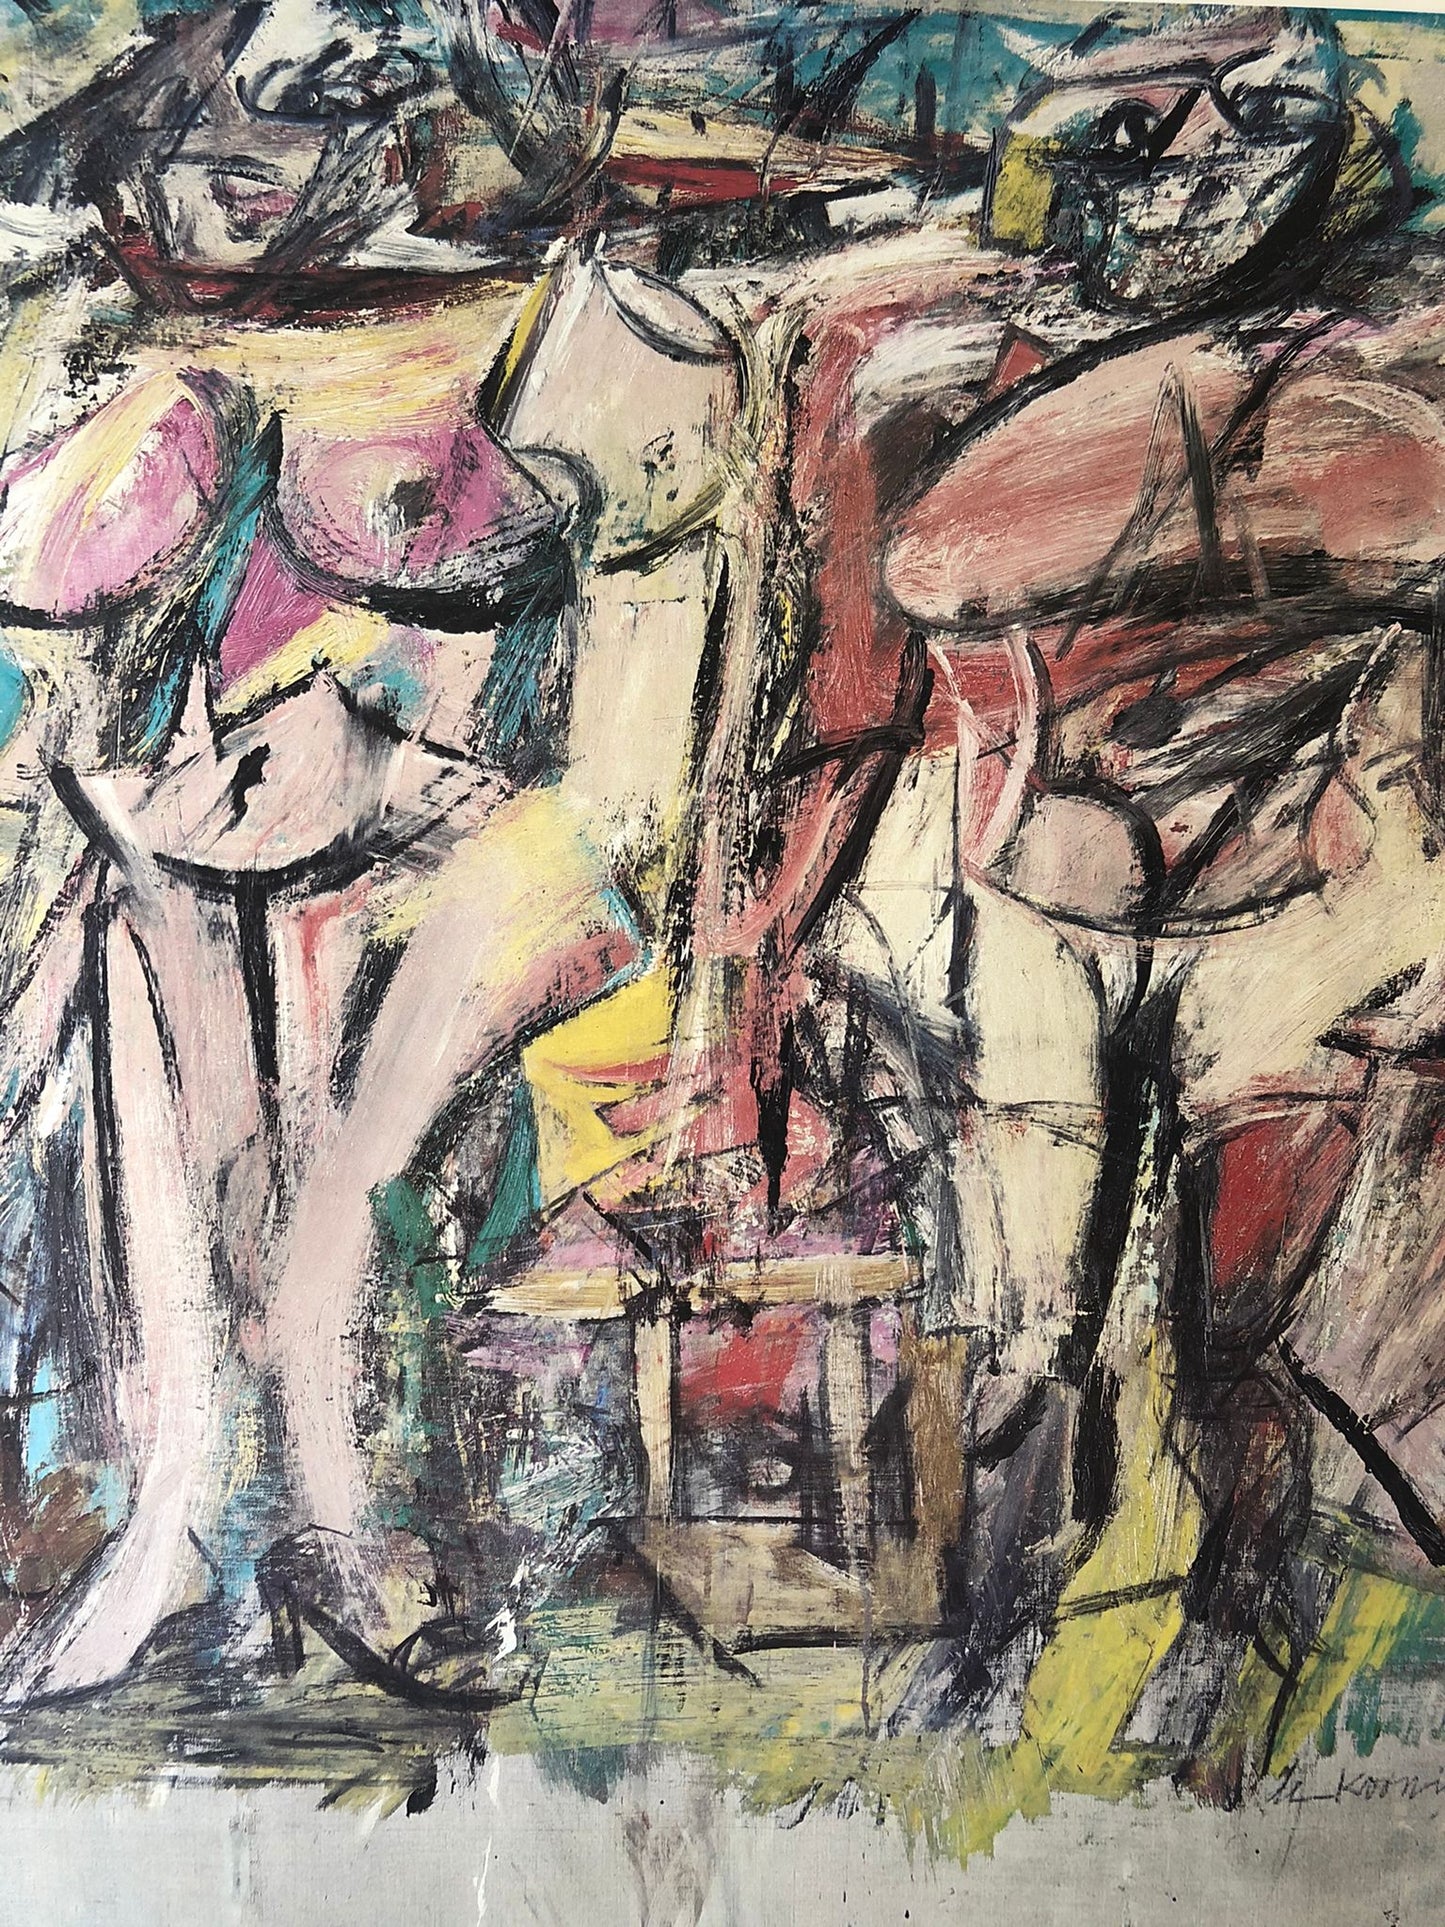 Willem de Kooning Pompidou Exhibition Poster